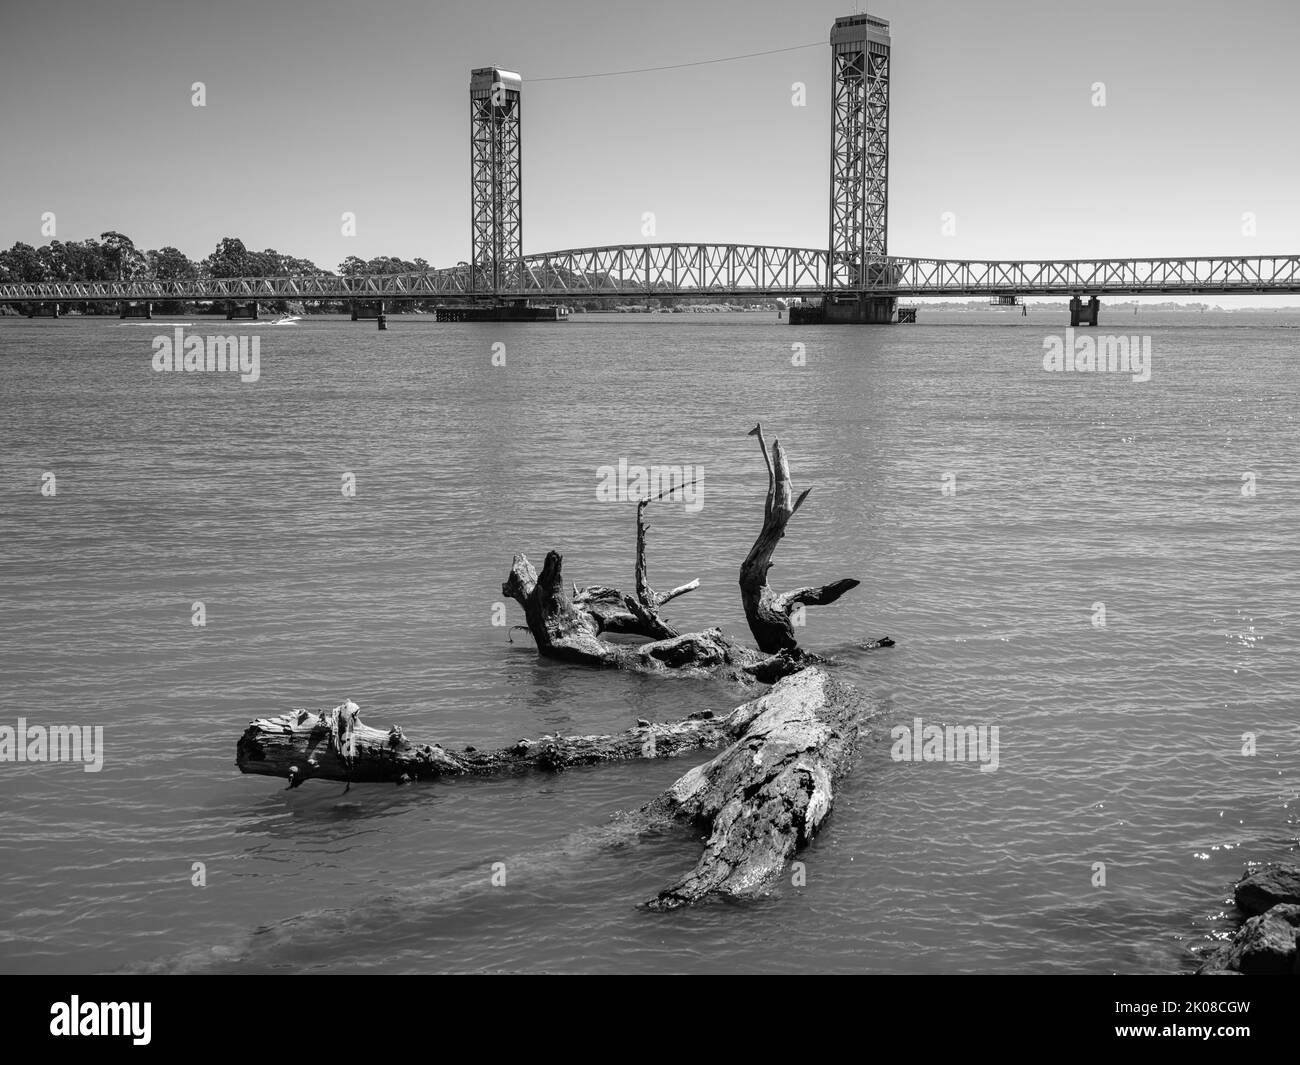 The Rio Vista Draw Bridge on the Sacramento River in California with a drifting tree washed ashore. Stock Photo